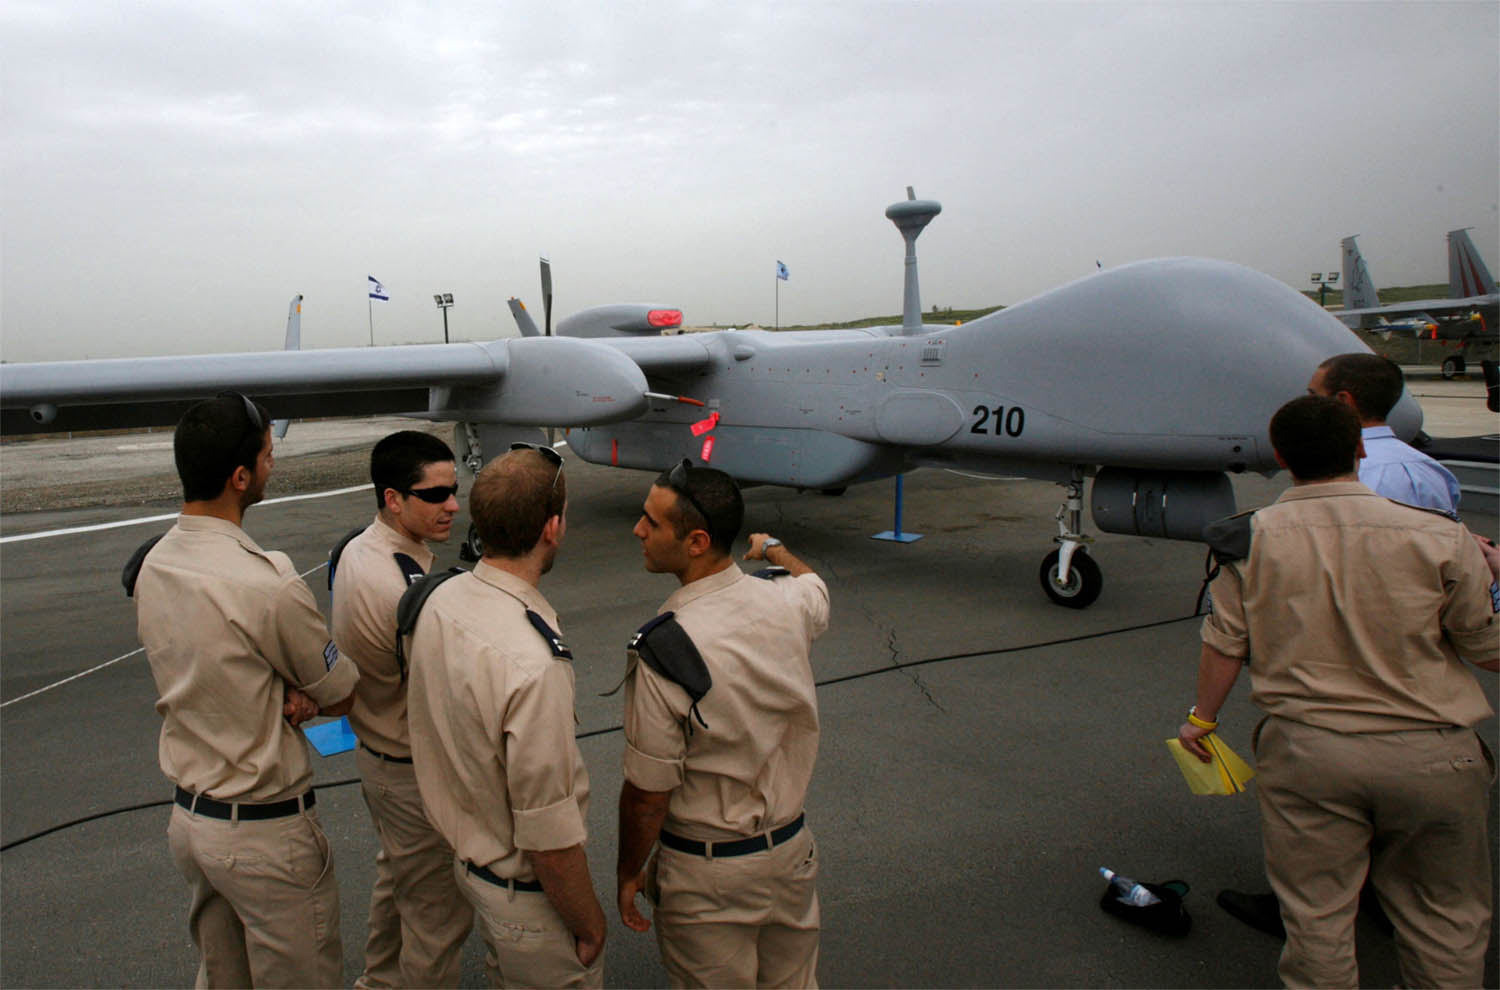 Israel is a world leader in UAV technology